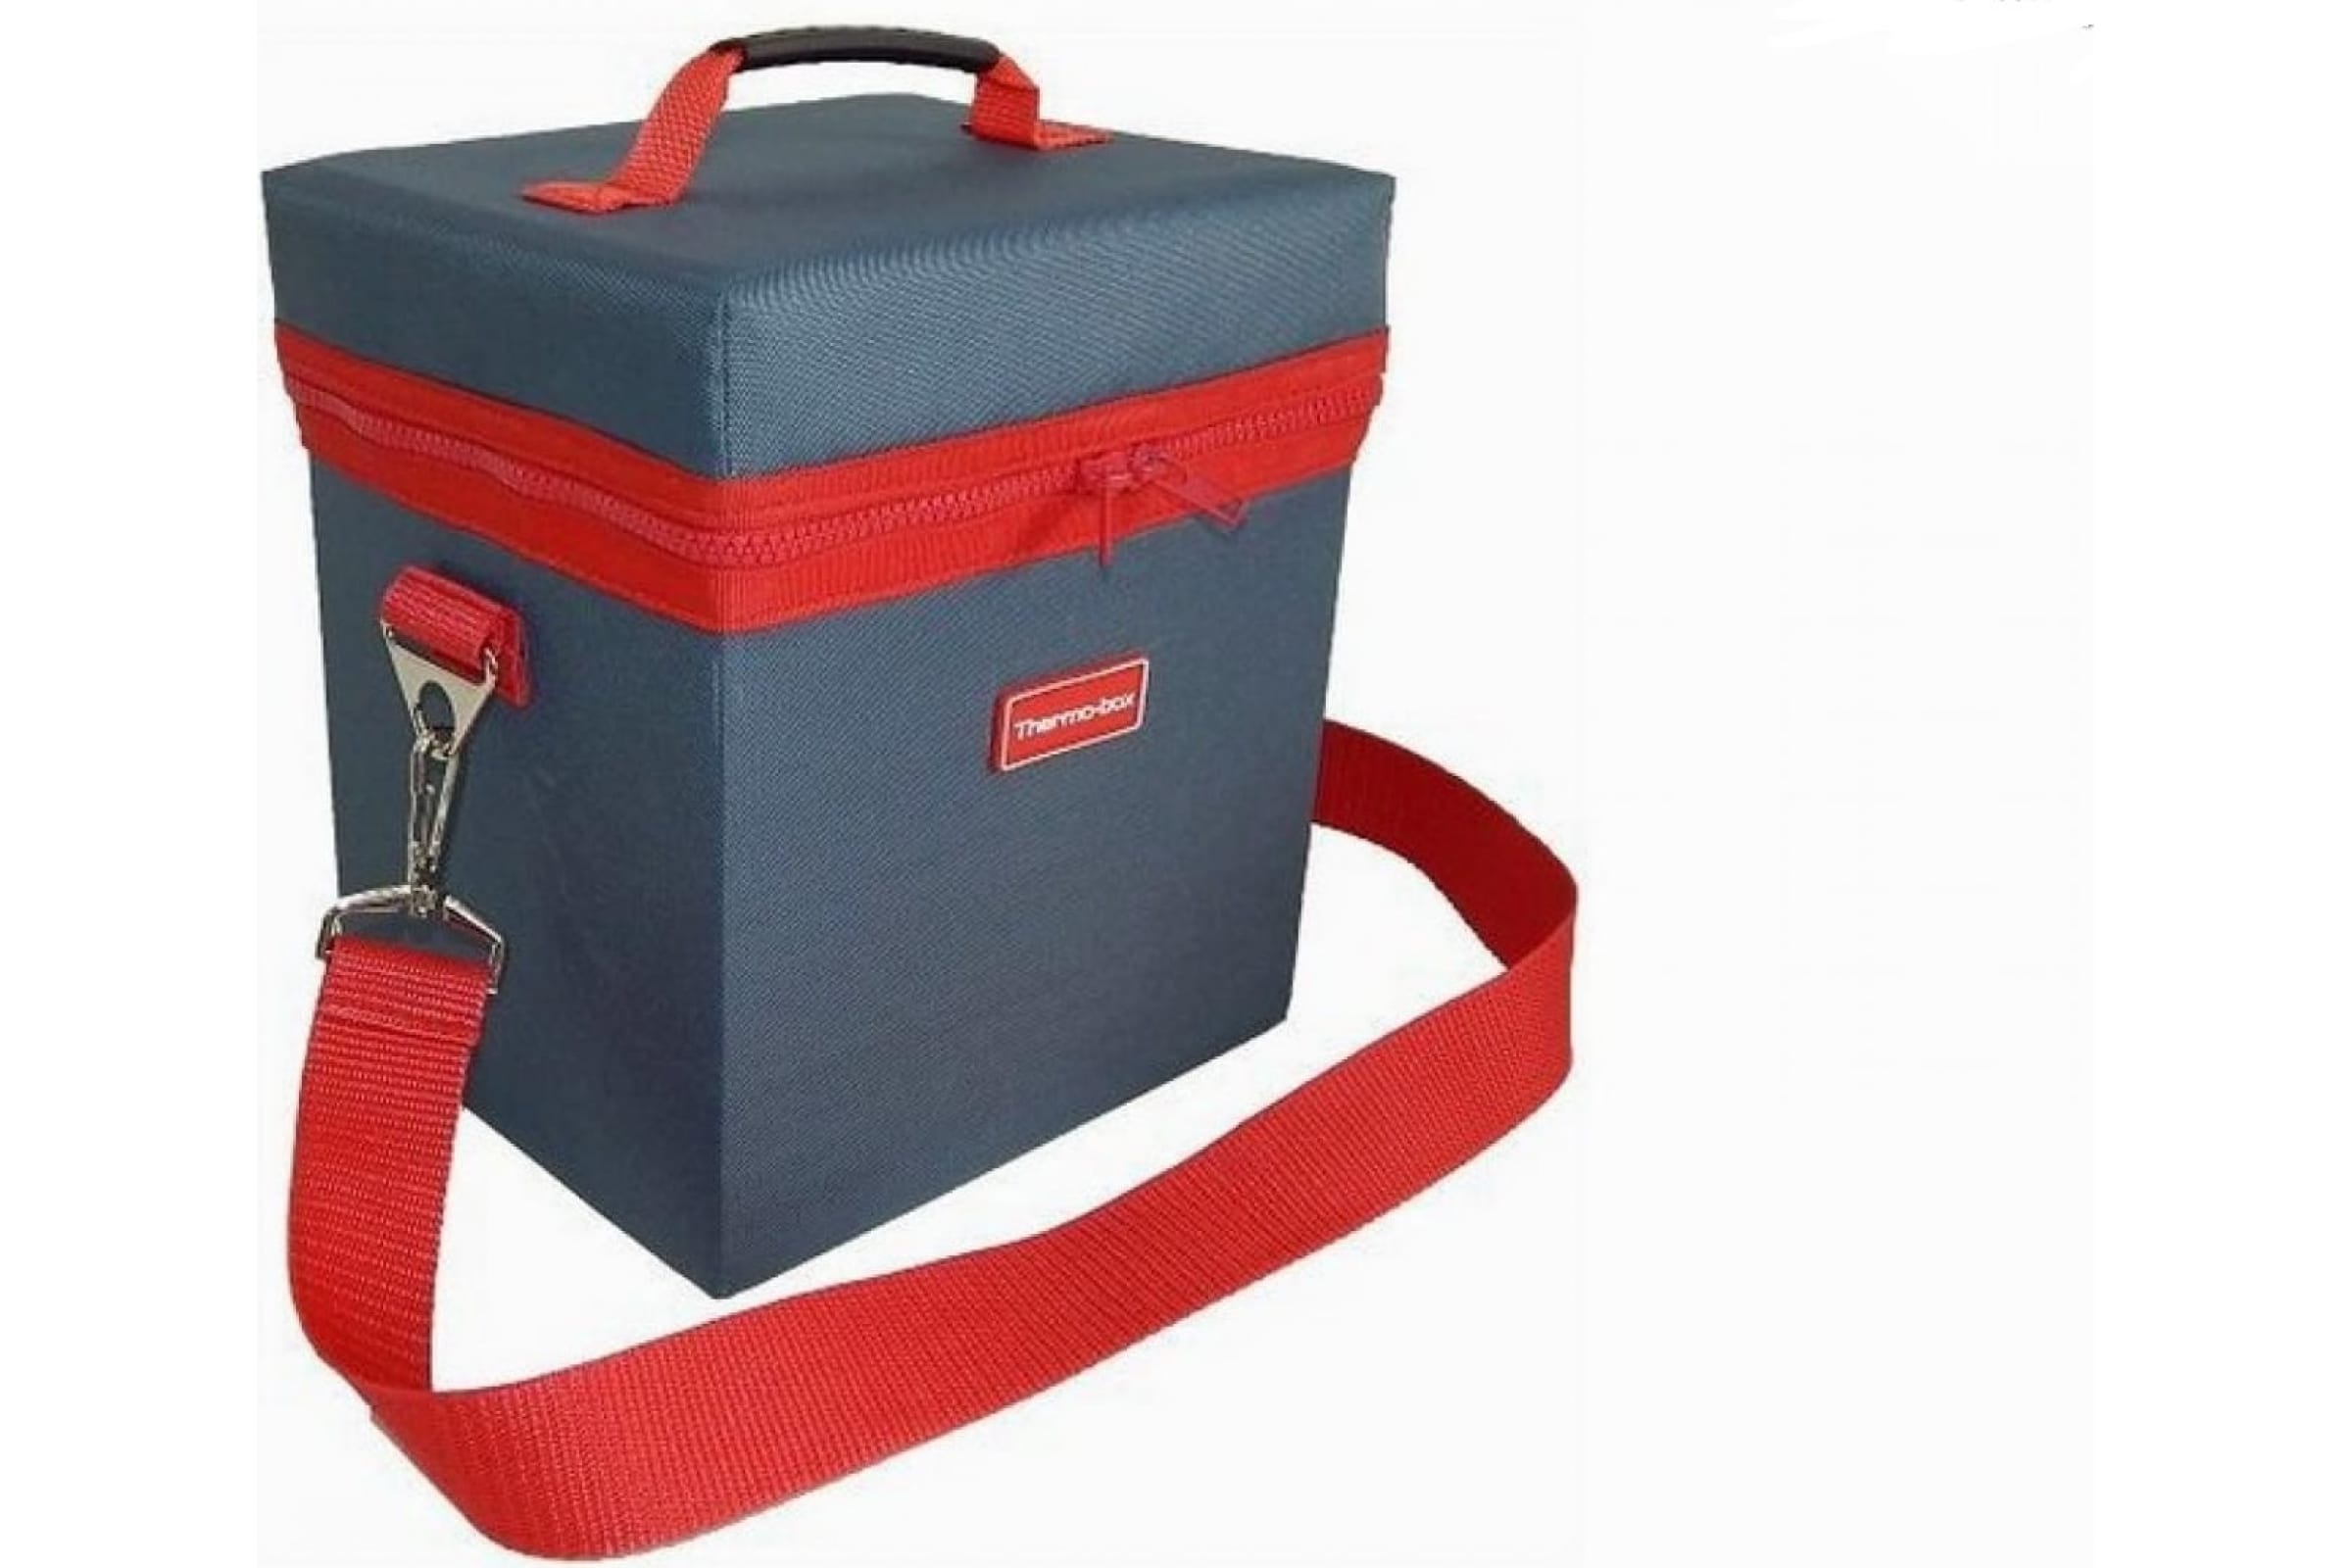 Термосумка Thermo-box (Термо-бокс). Размер М. Цвет: маренго с красной окантовкой.